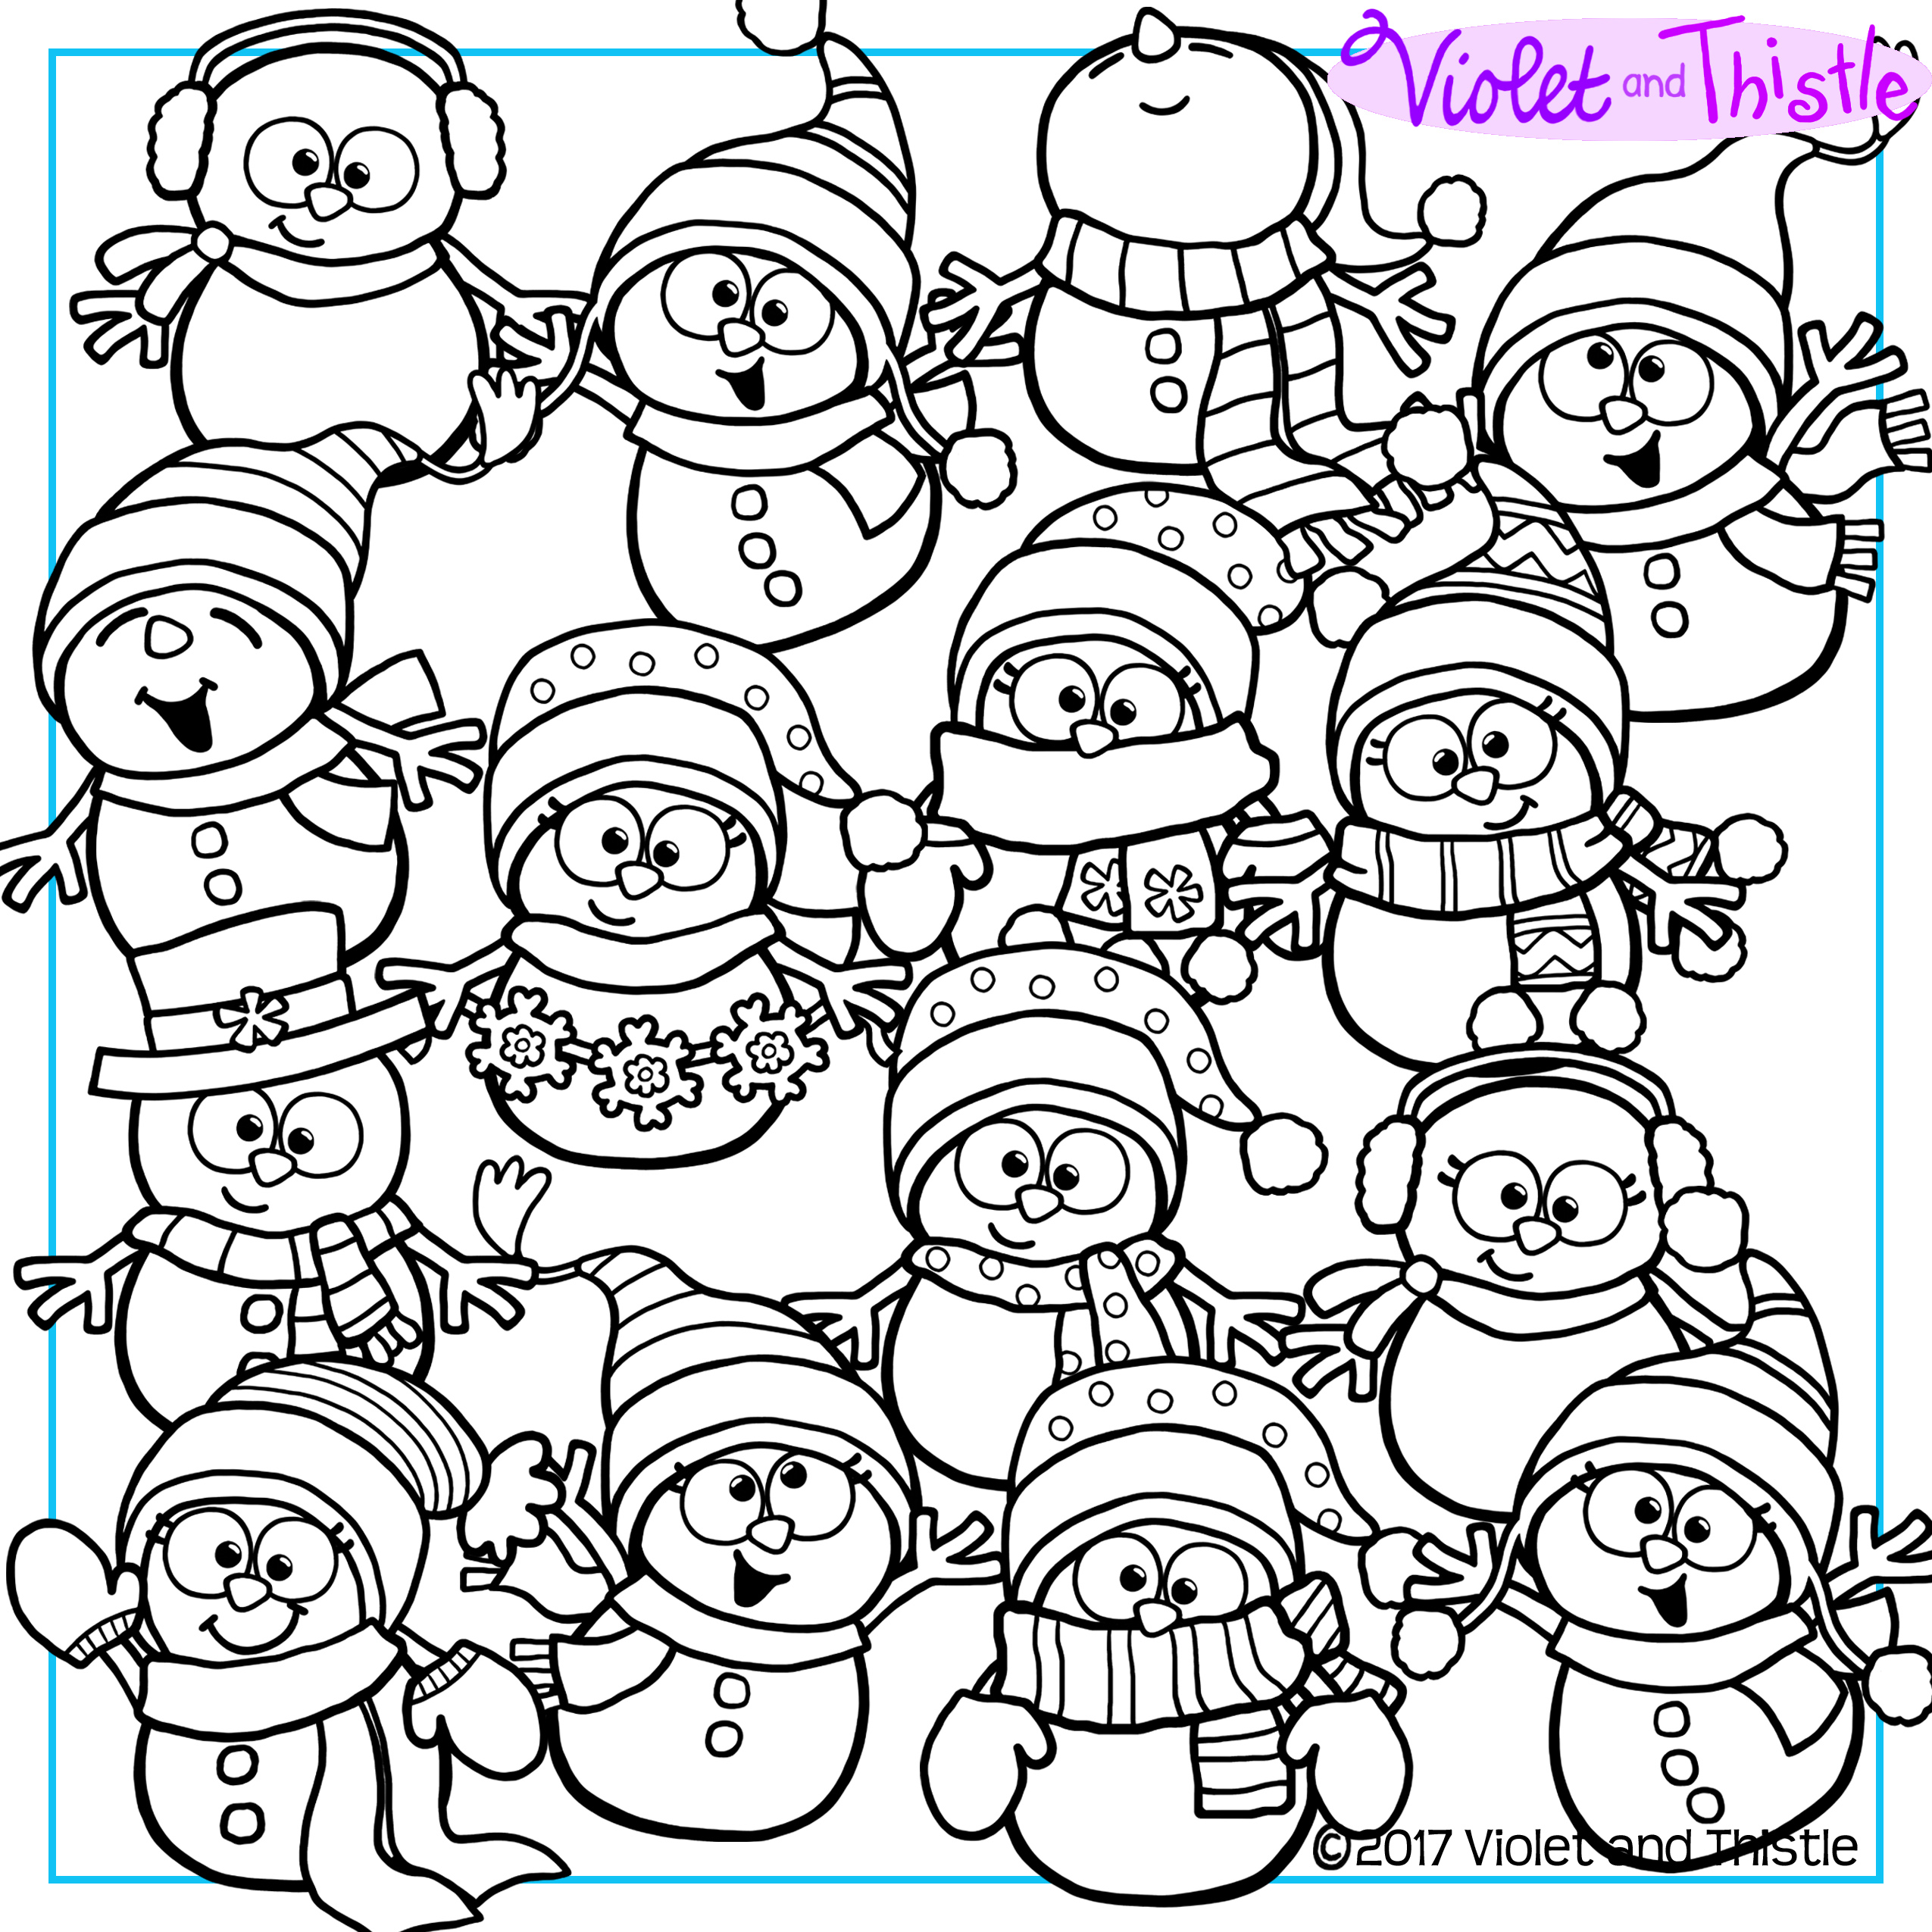 Snowman clipart super cute happy frosty winter snowmen fun friends in top hats mittens clip art made by teachers